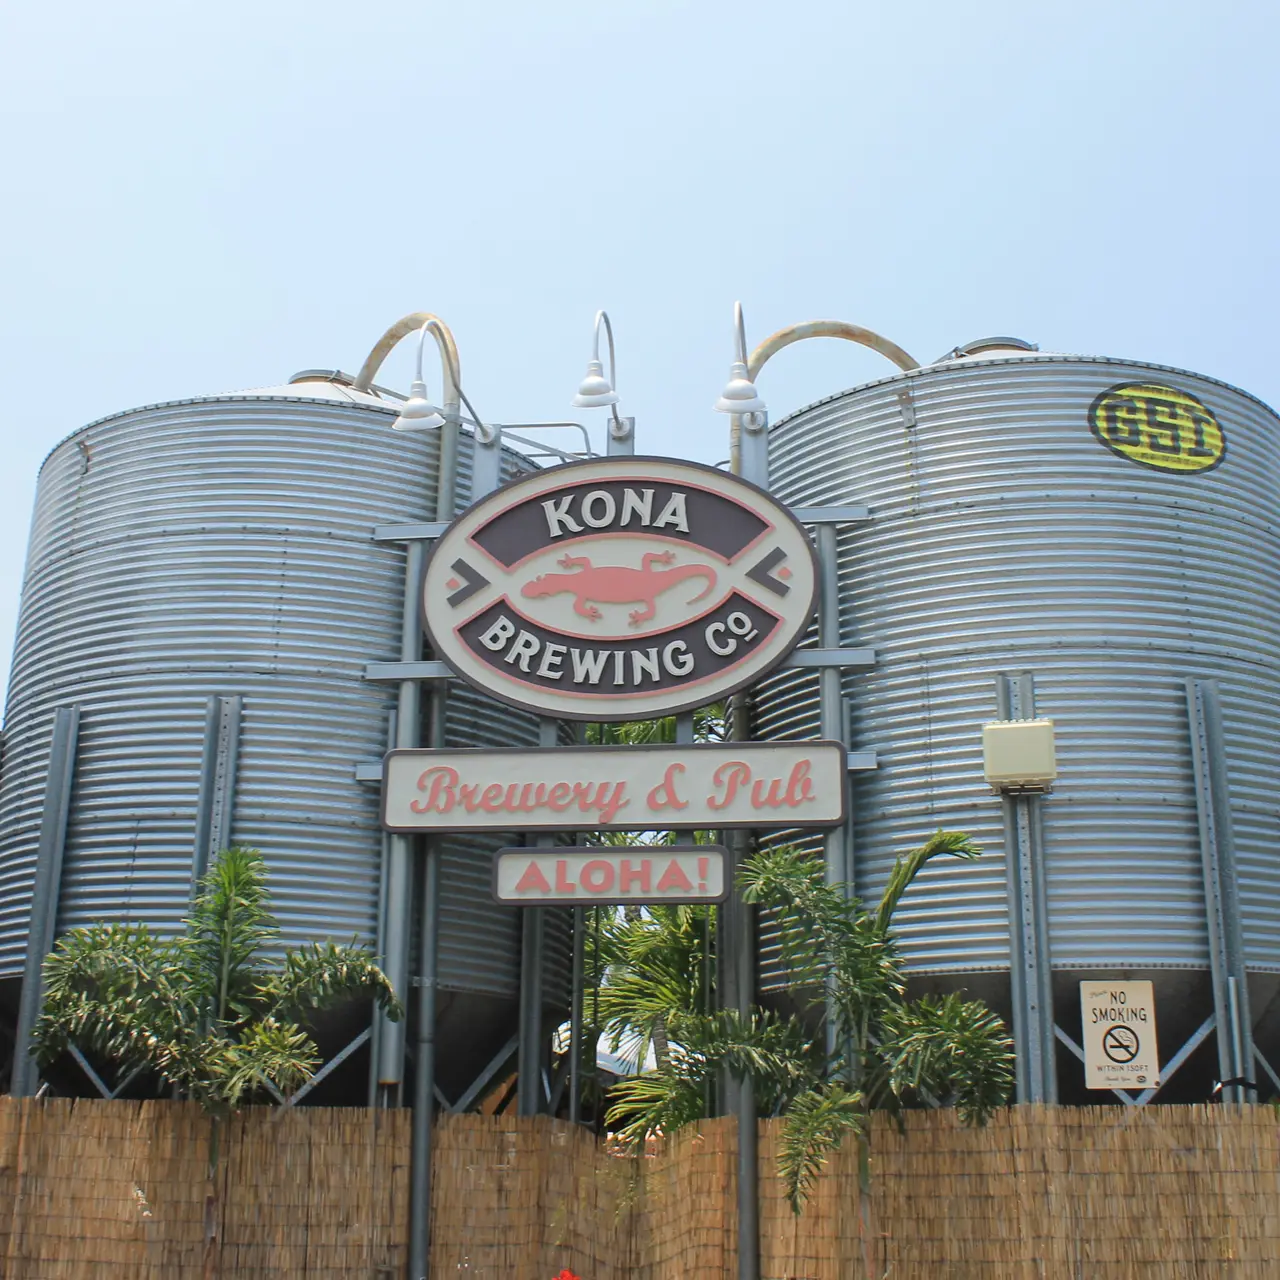 Kona Brewing is a Restaurant located in the city of Kailua-Kona on Big Island, Hawaii